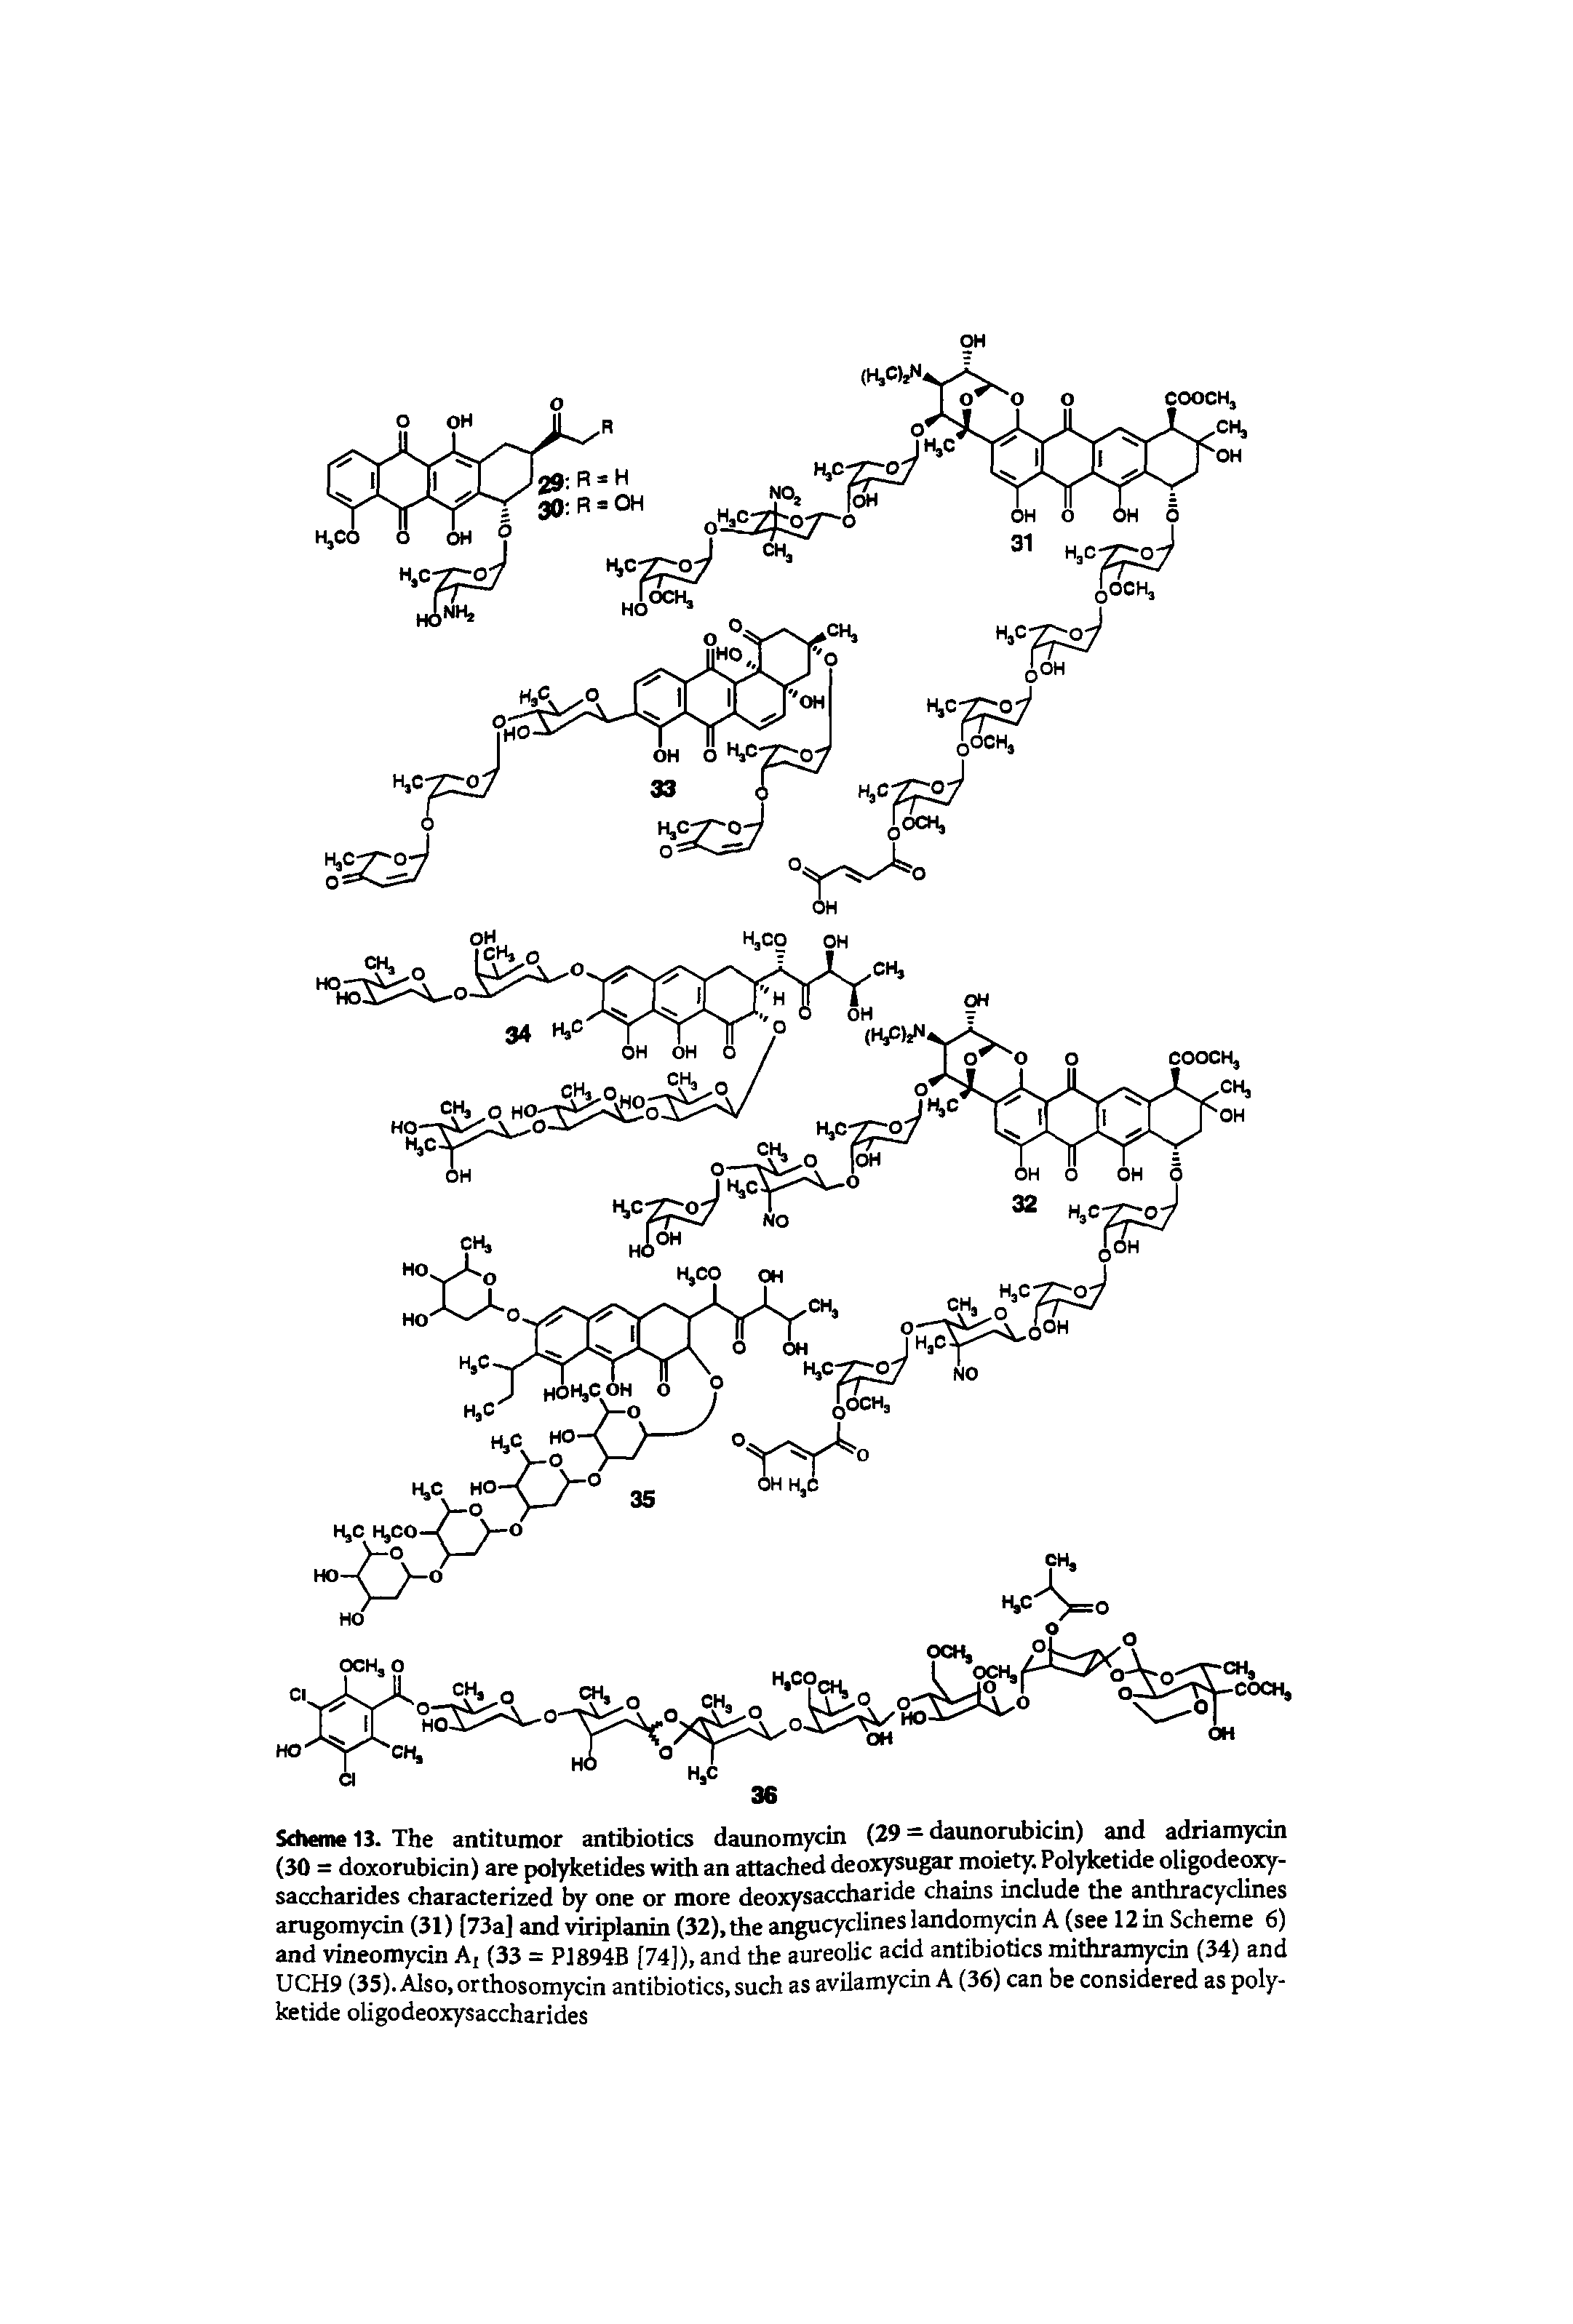 Scheme 13. The antitumor antibiotics daunomycin (29 = daunorubicin) and adiiamycin (30 = doxorubicin) are polyketides with an attached deox ugar moiety. Polyketide oligodeoxy-saccharides characterized by one or more deoxysaccharide chains include the anthracyclines arugomycin (31) [73a] and viriplanin (32), the angucyclines landomycin A (see 12 in Scheme 6) and vineomycin A, (33 = P1894B [74]), and the aureolic acid antibiotics mithramycin (34) and UCH9 (35).Also,orthosomydn antibiotics, such as avUamycin A (36) can be considered as polyketide oligodeoxysaccharides...